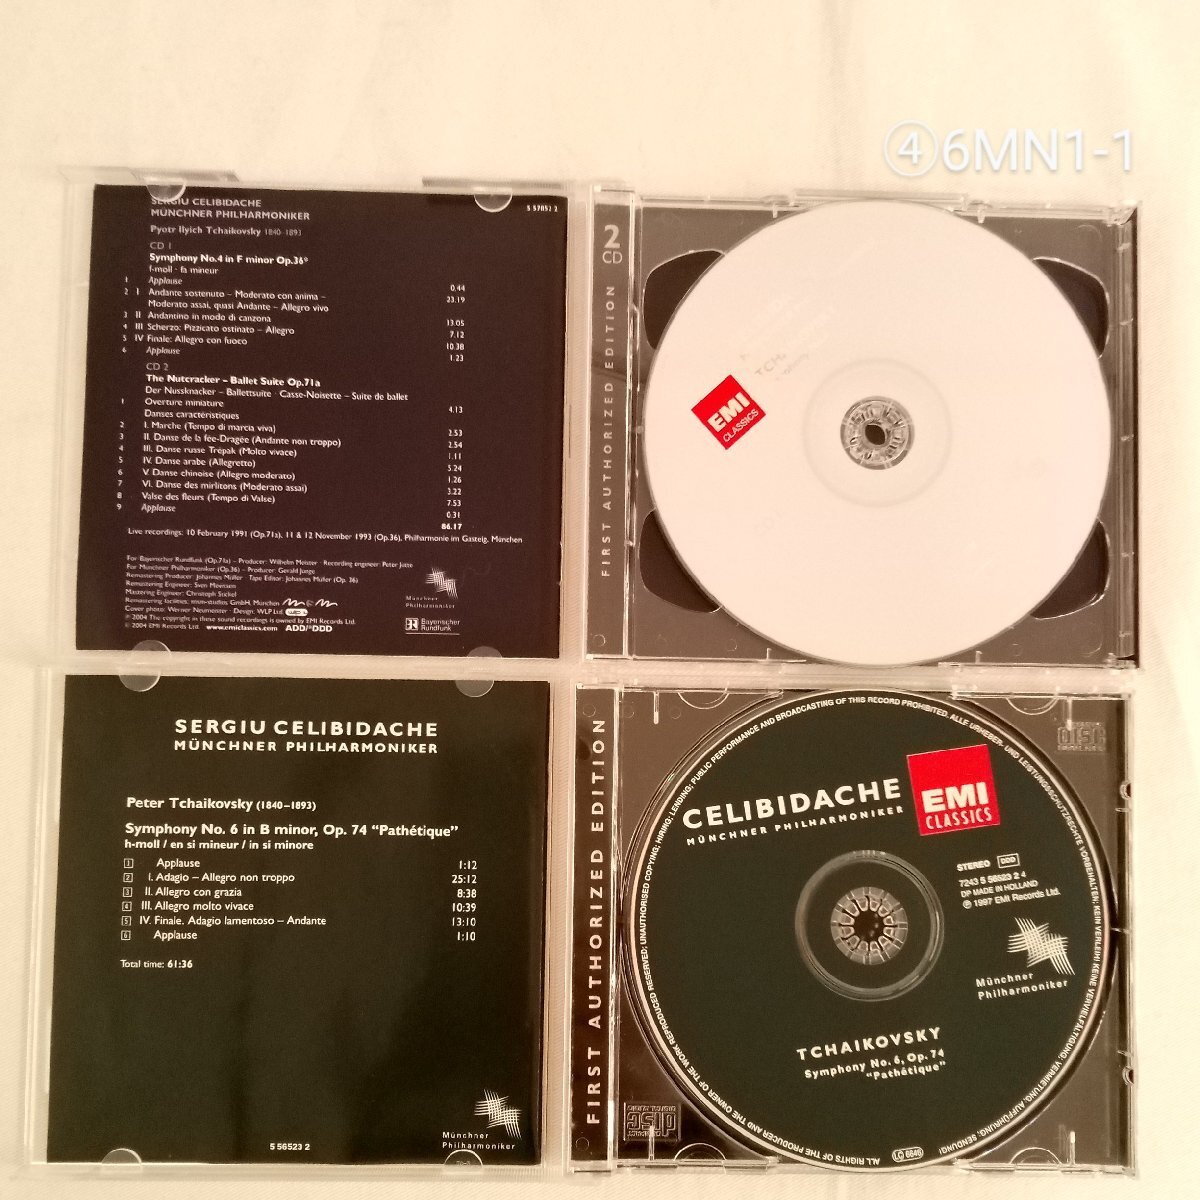 EMI/RCA クラシック 中古CD まとめ売り 6枚セット チャイコフスキー・ブルックナー 6MN1-1E_画像4